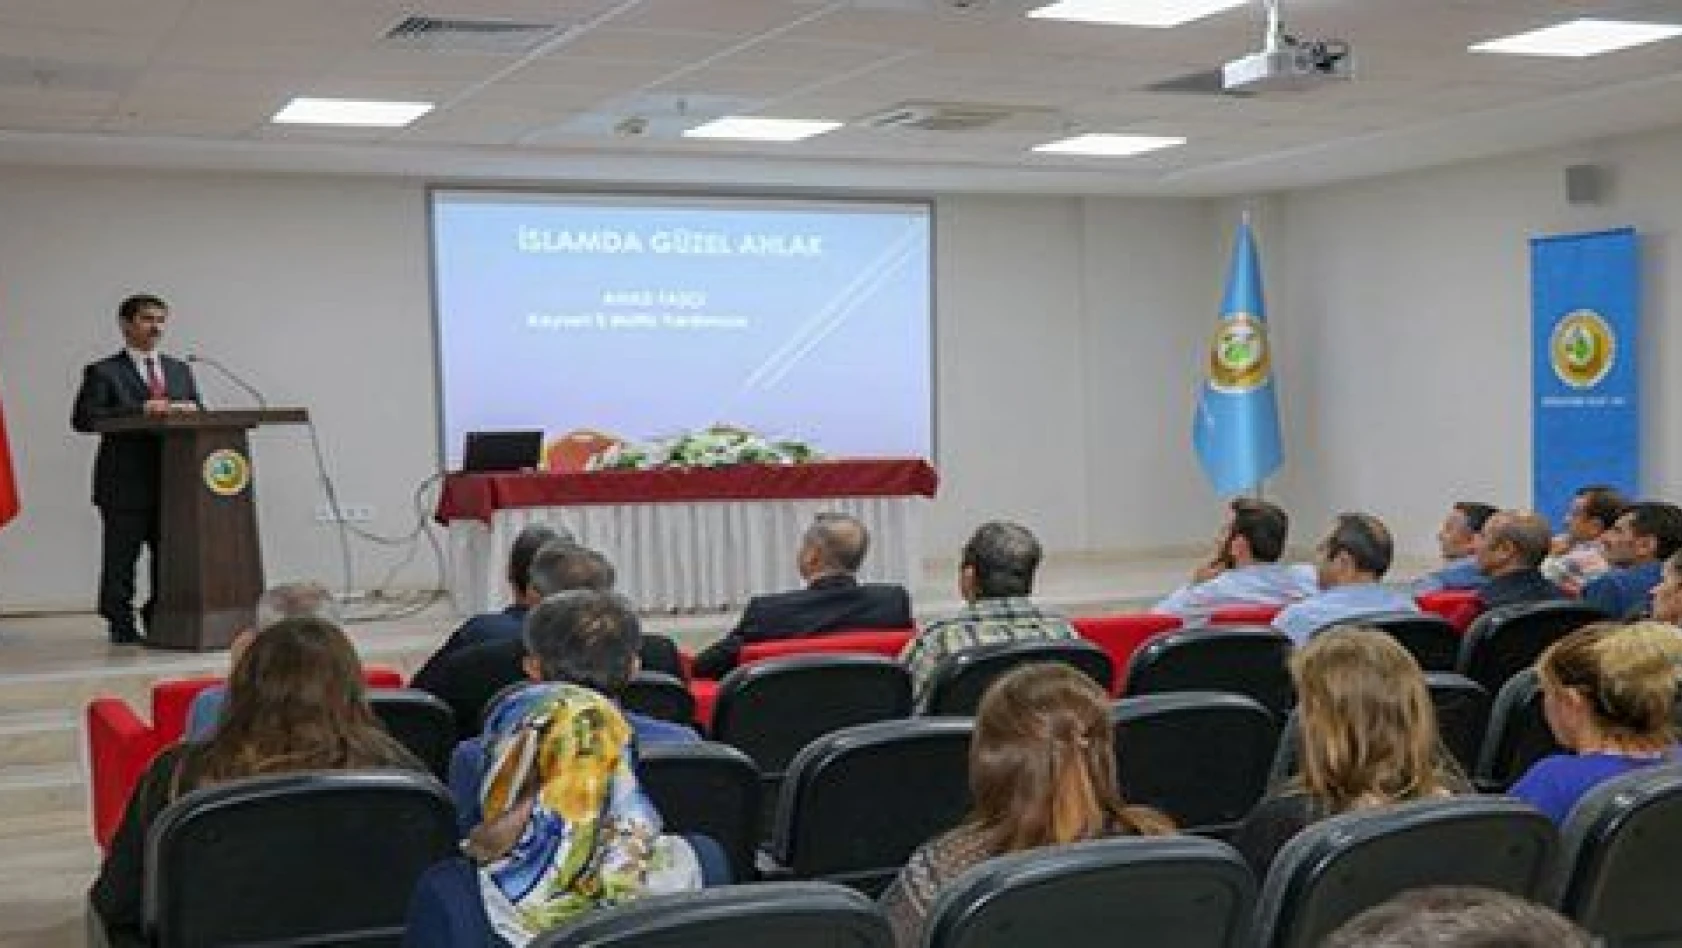 İslam'da Güzel Ahlak Konferansı